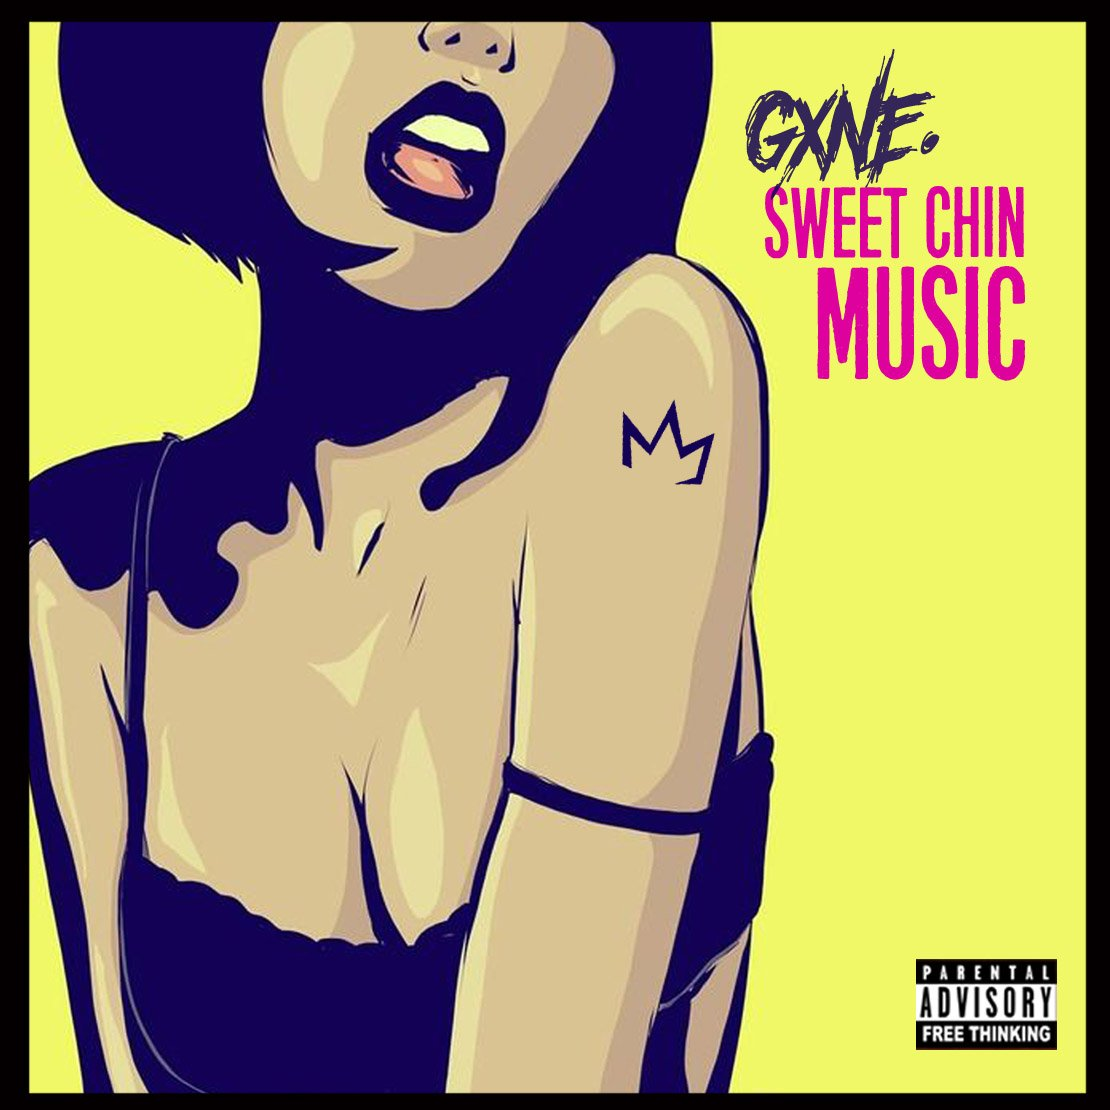 Gone Wallace – “Sweet Chin Music”